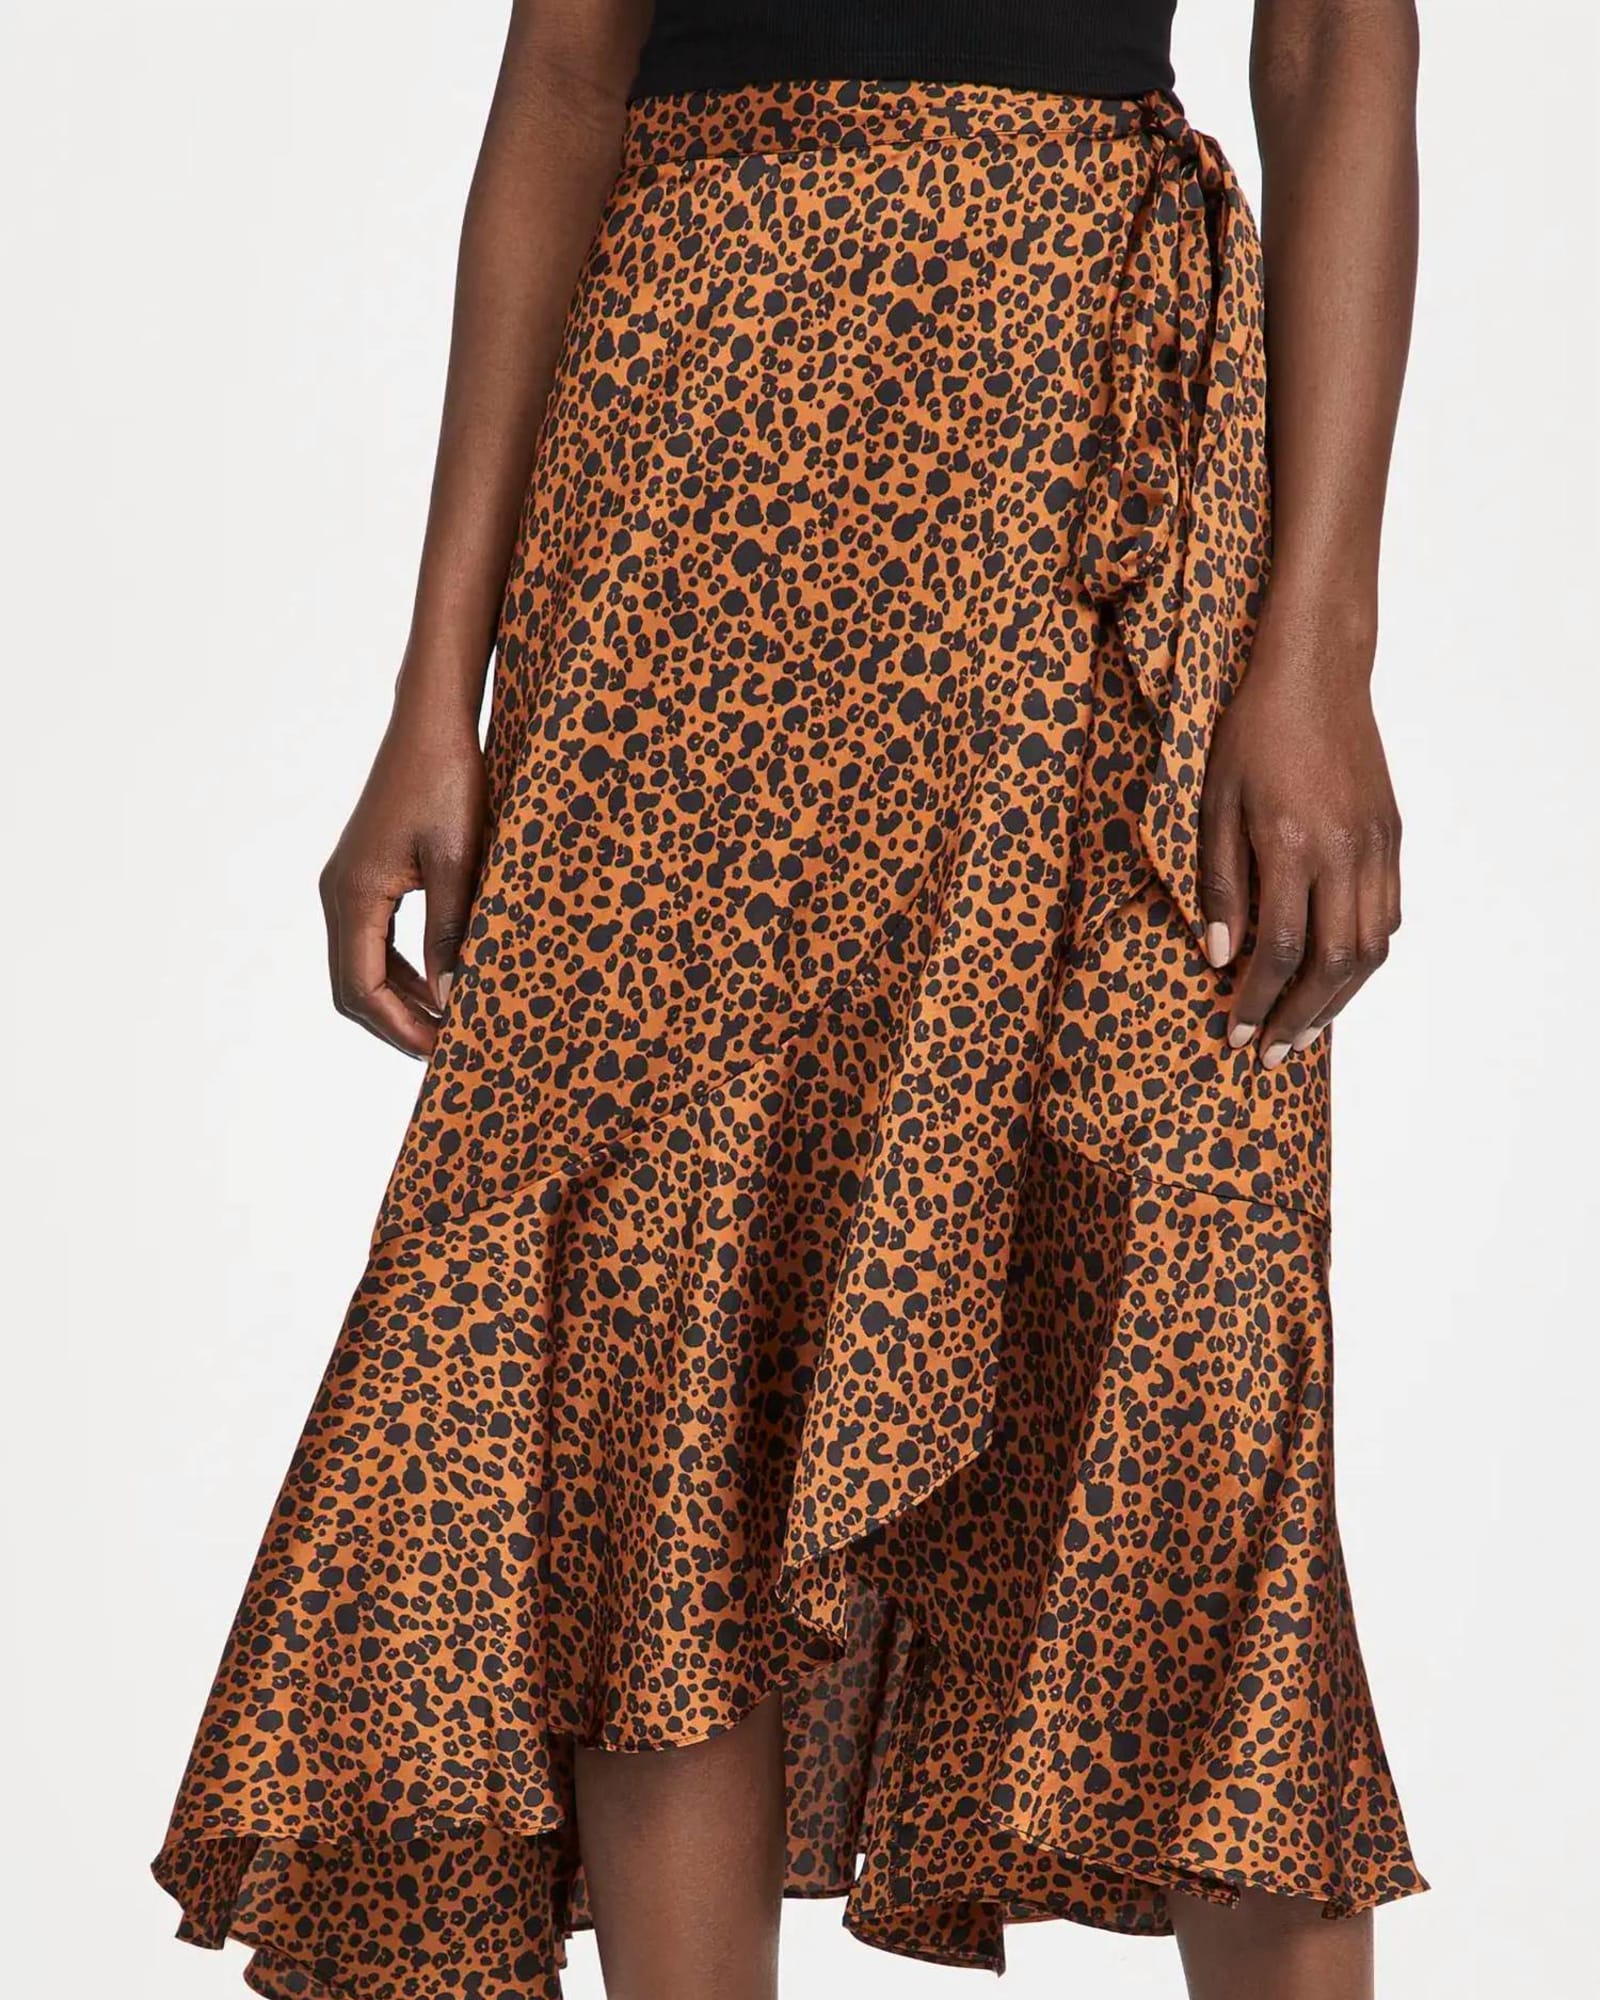 Printed Wrap Skirt in Leopard Print | Leopard Print